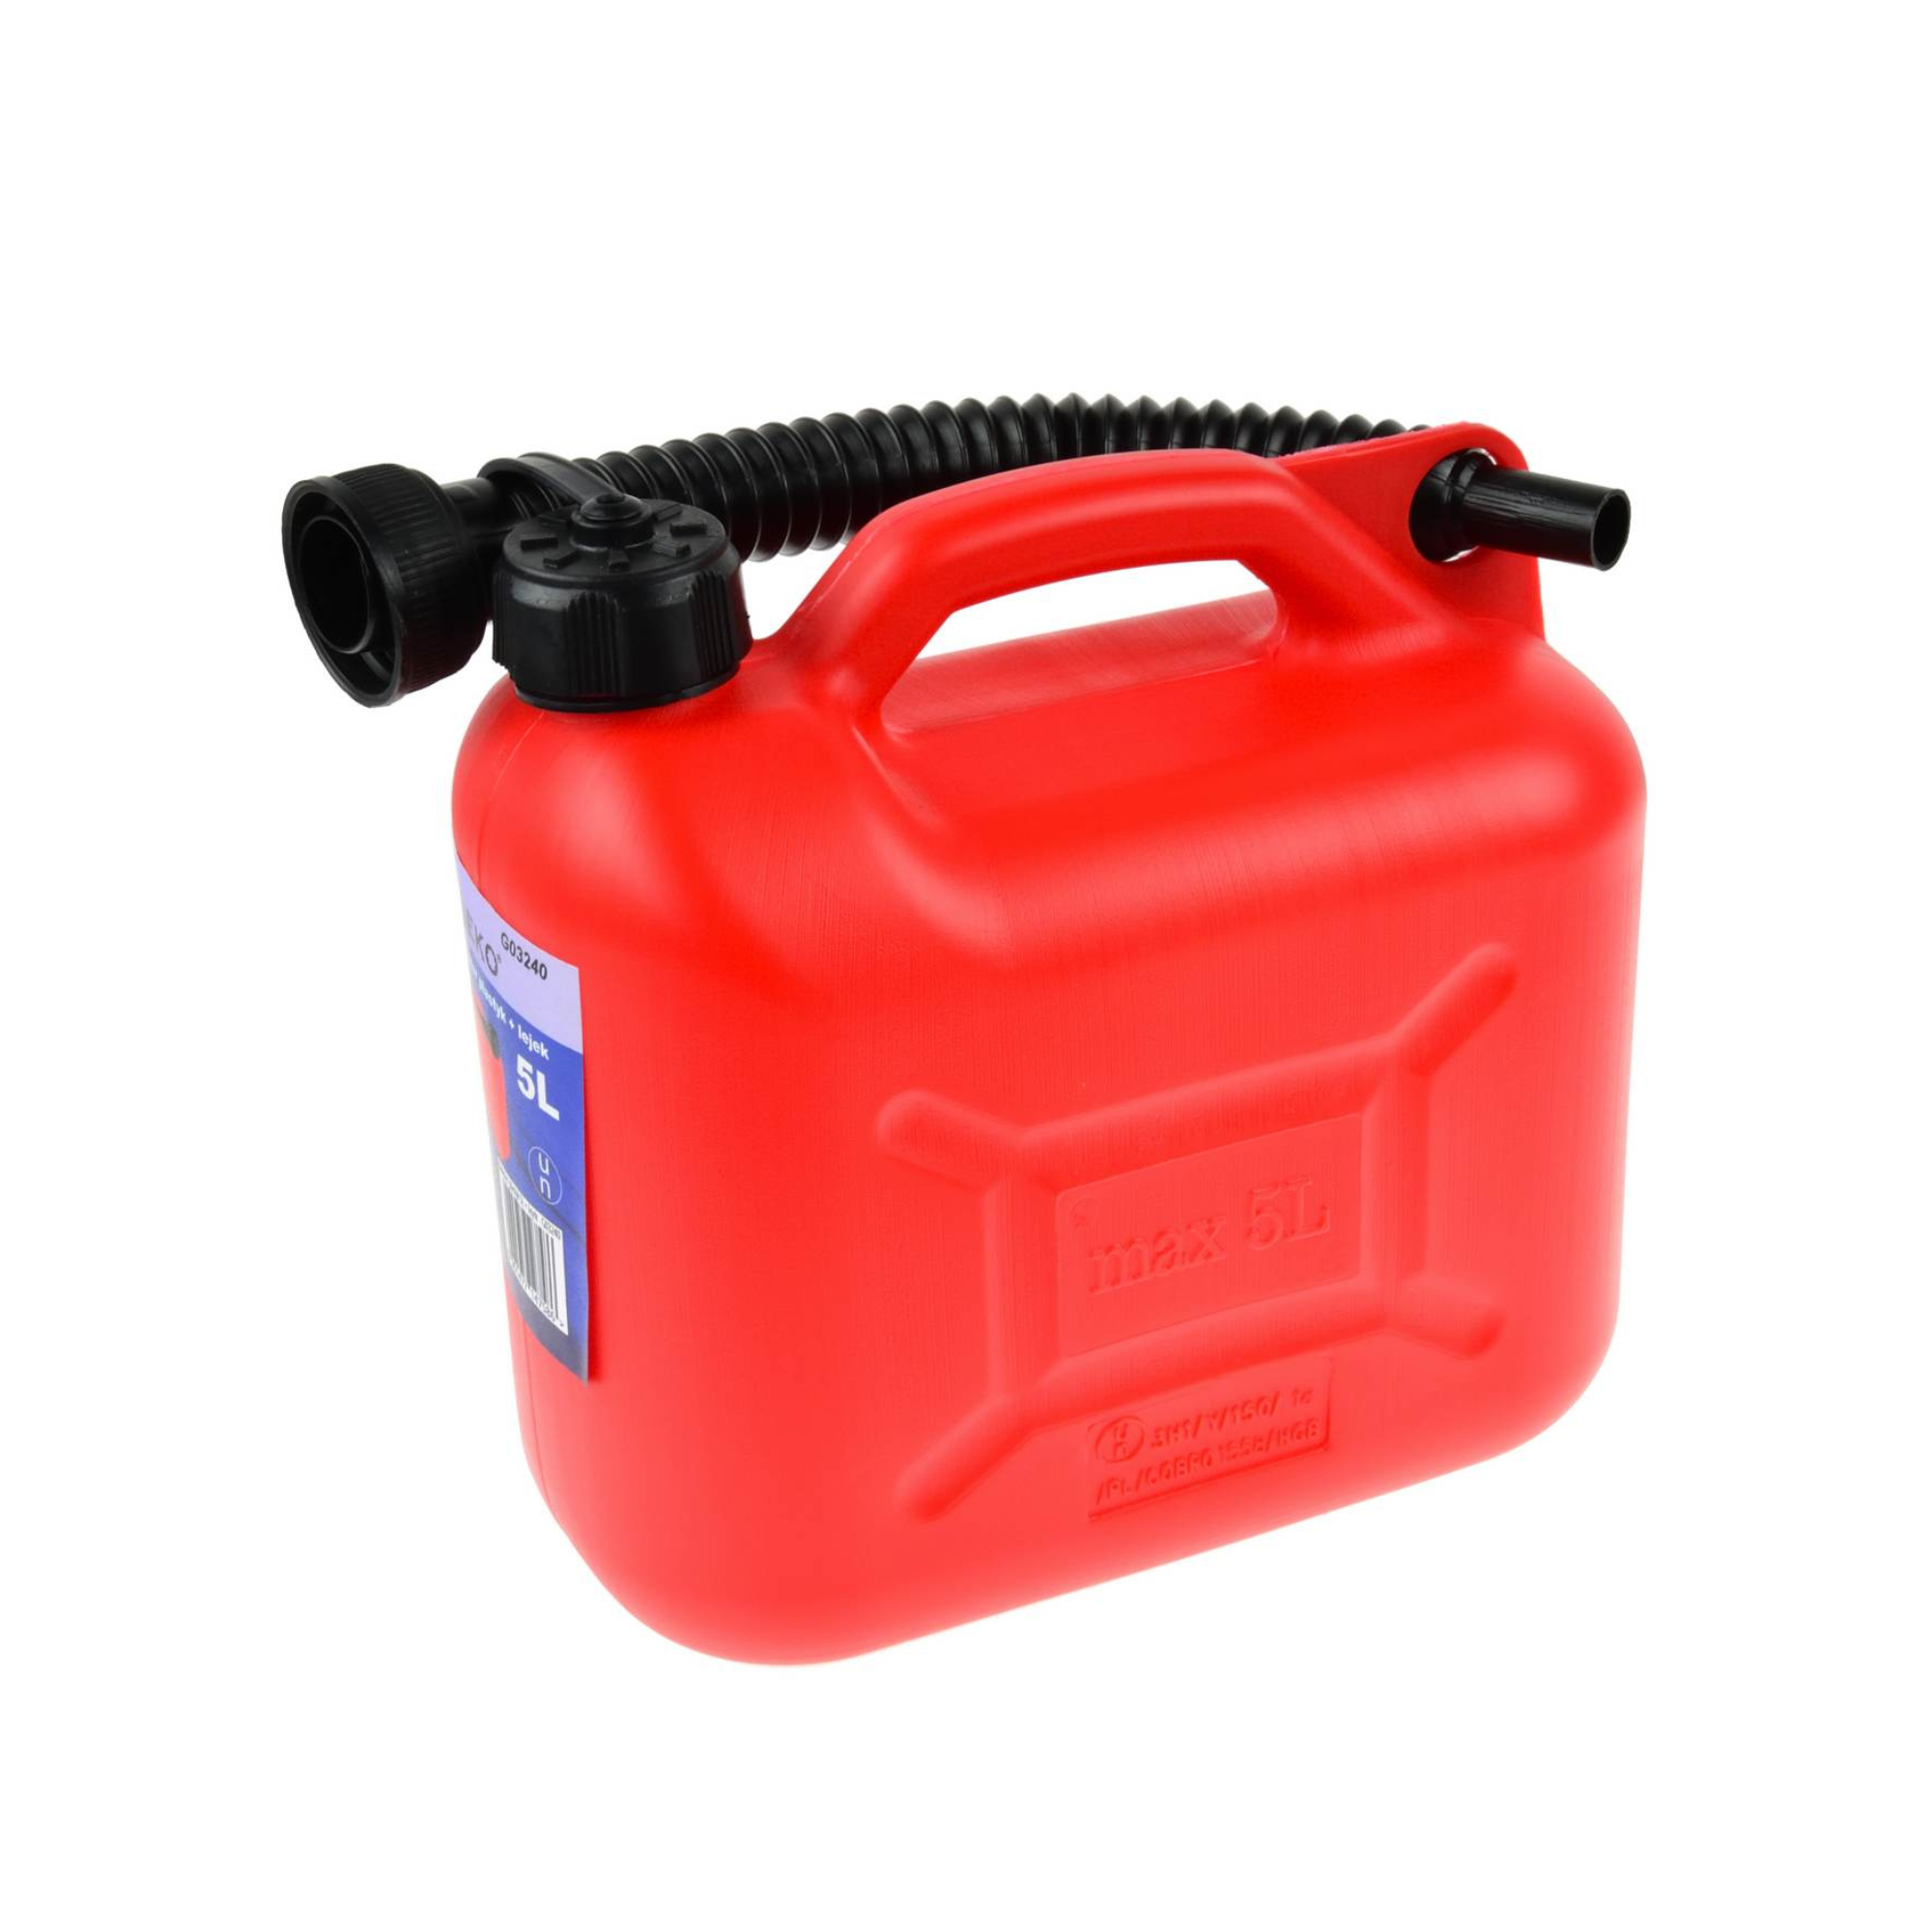 Jerrycan essence 5 litres